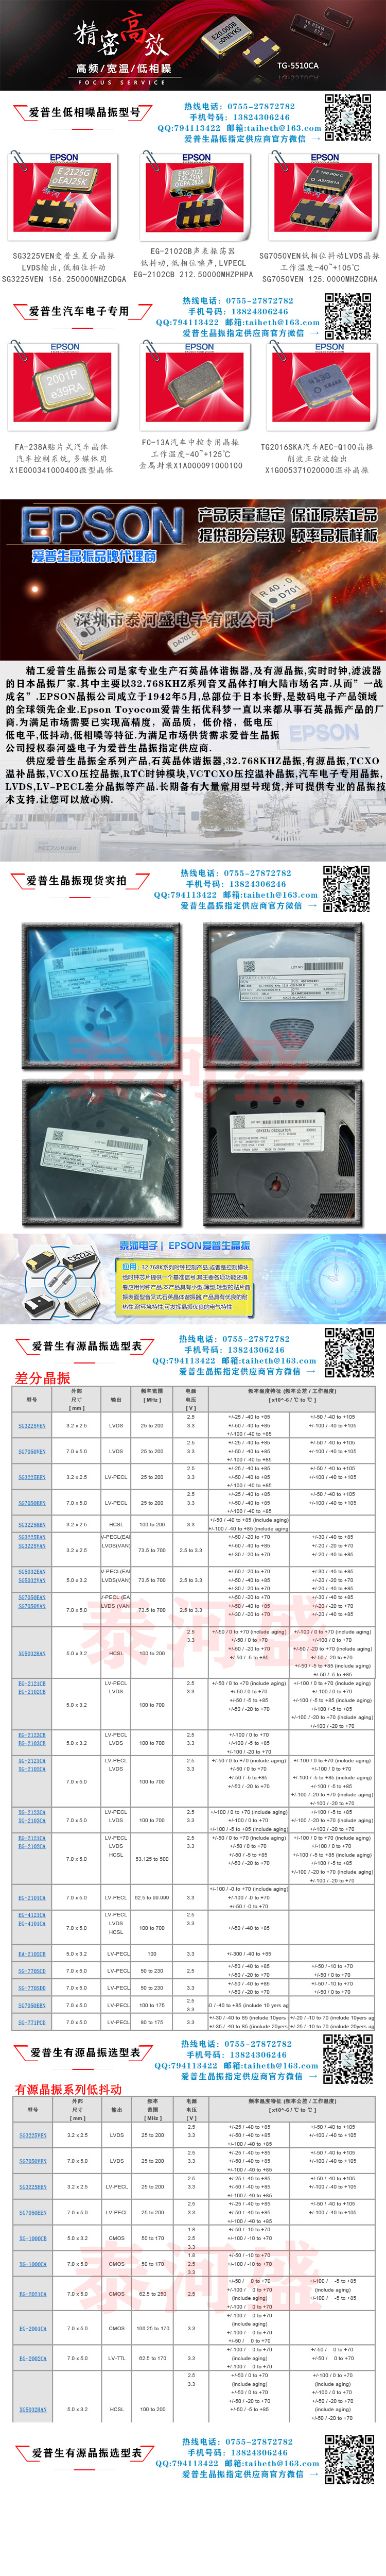 Epson SMD crystal oscillator X1E0000210111 quartz crystal TSX-3225 small volume -20 ℃ to 75 ℃